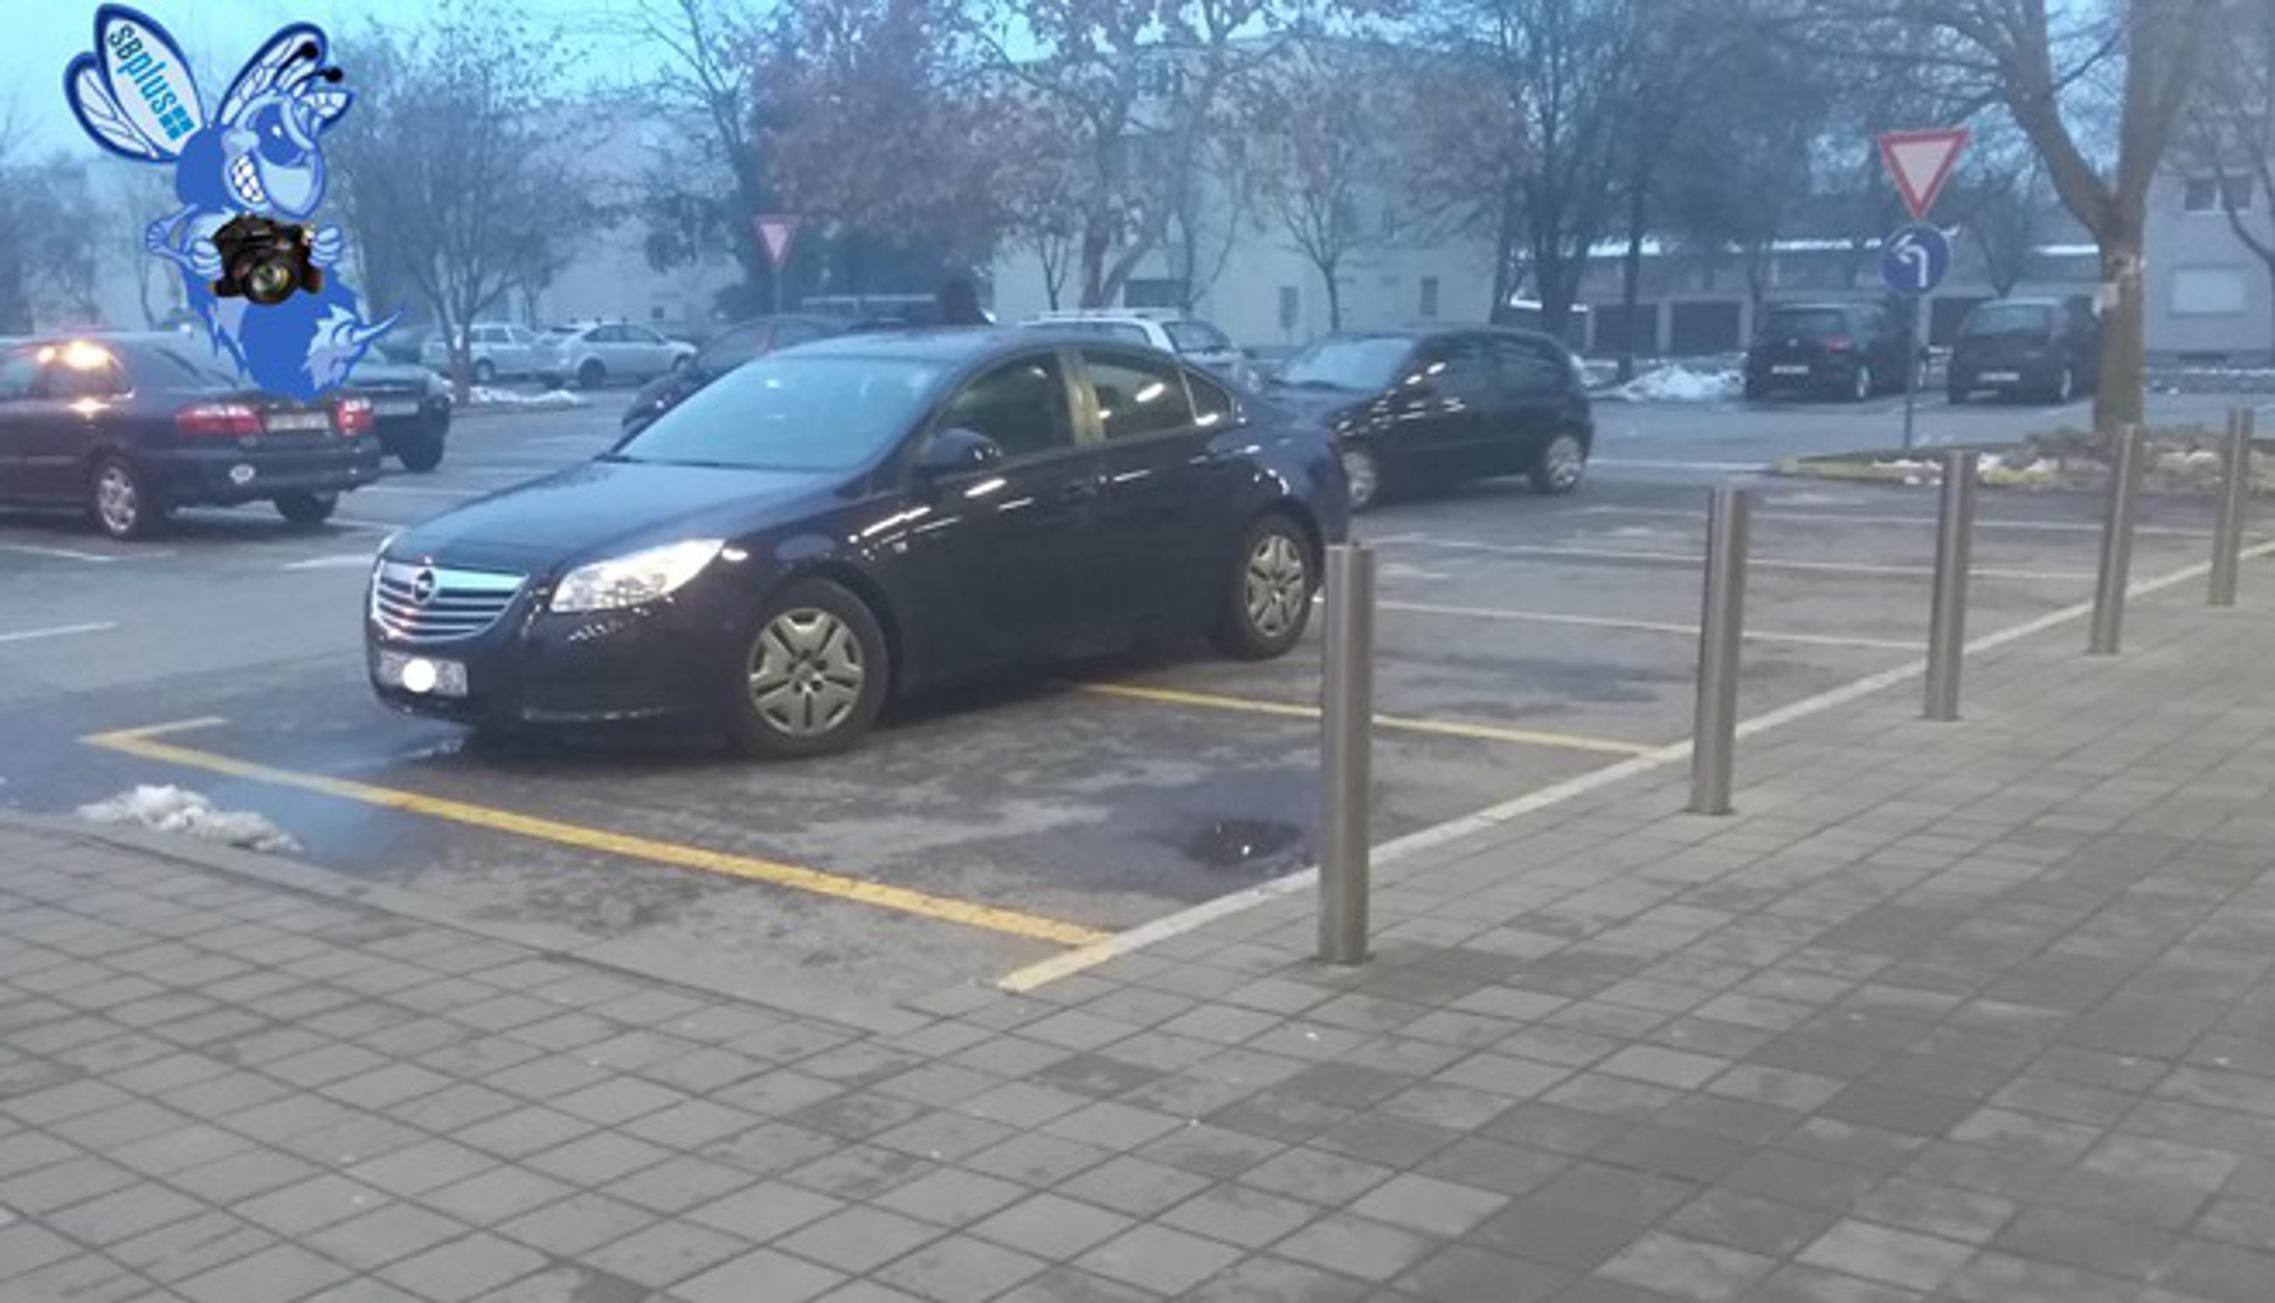 Parkiranje u Slavonskom Brodu